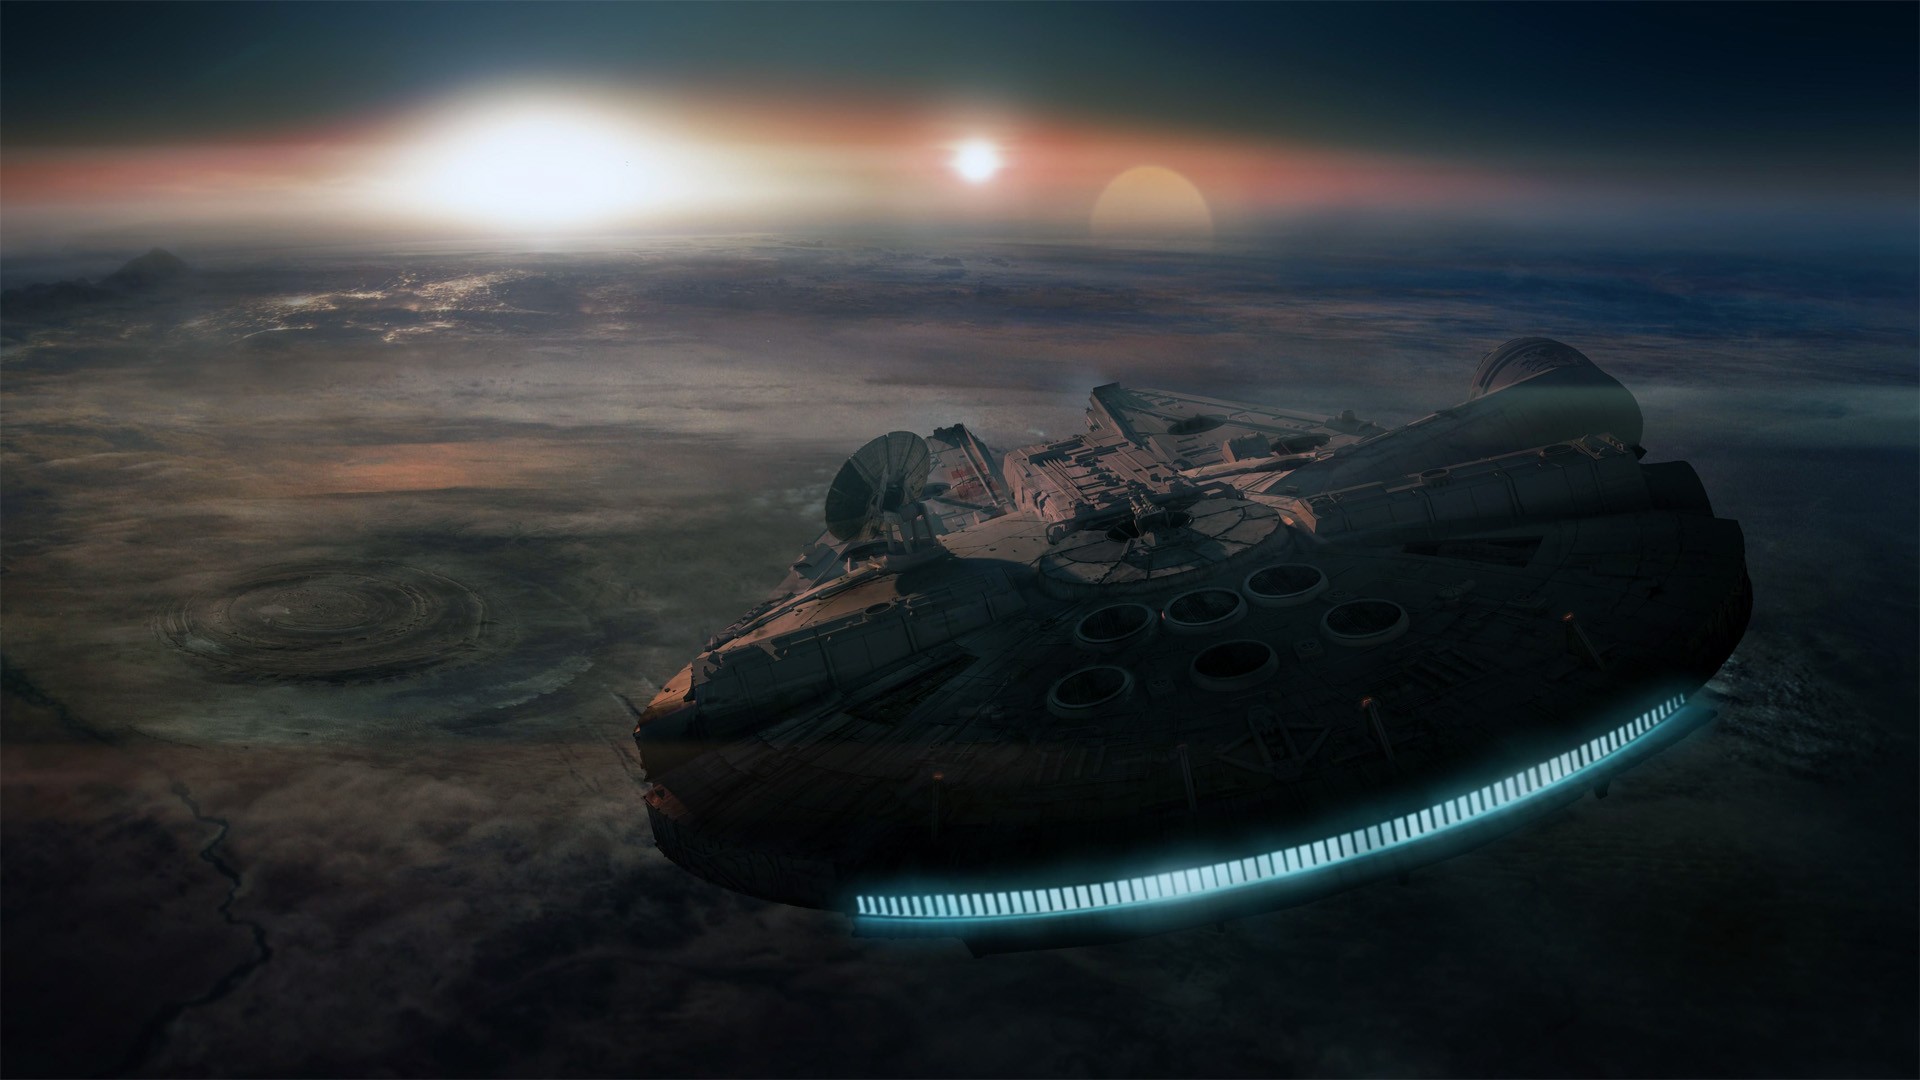 General 1920x1080 Star Wars Millennium Falcon Star Wars Ships vehicle planet science fiction CGI digital art